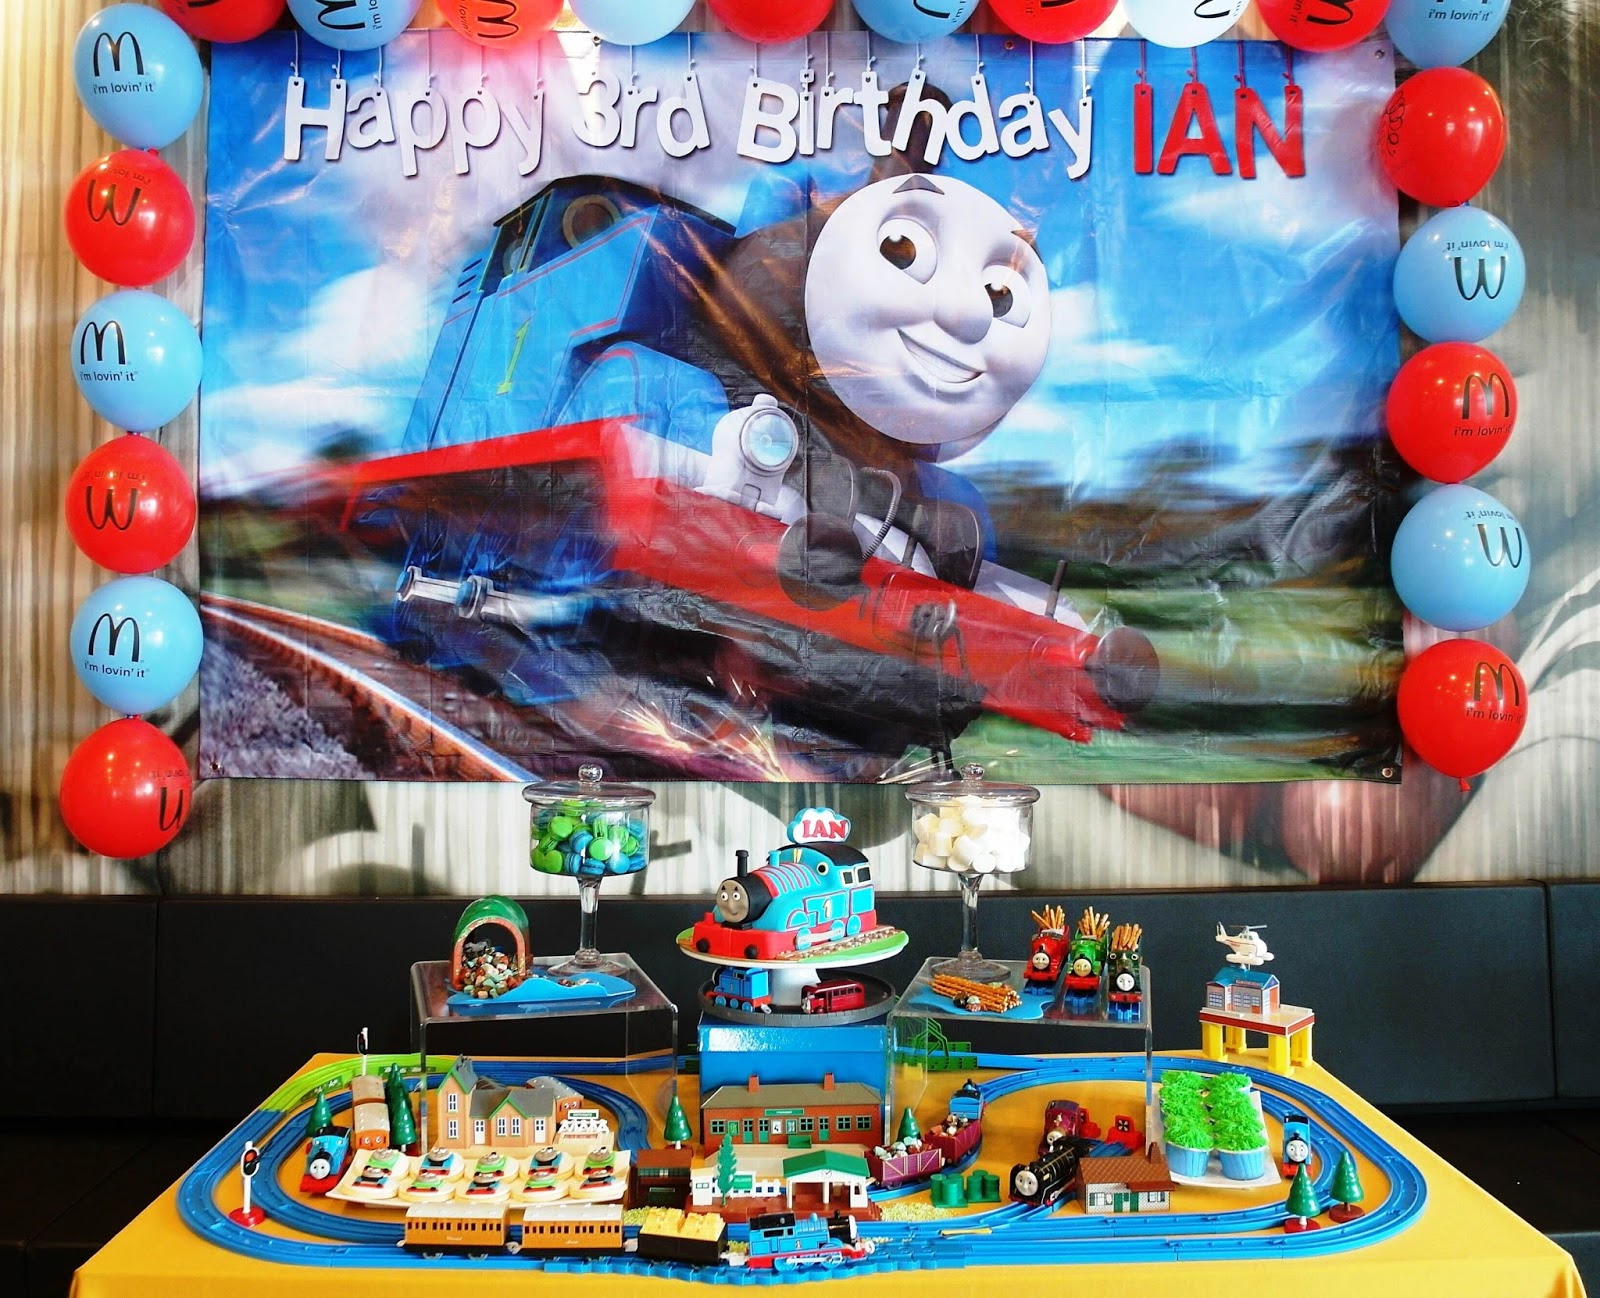 Ian's 3rd Thomas Birthday